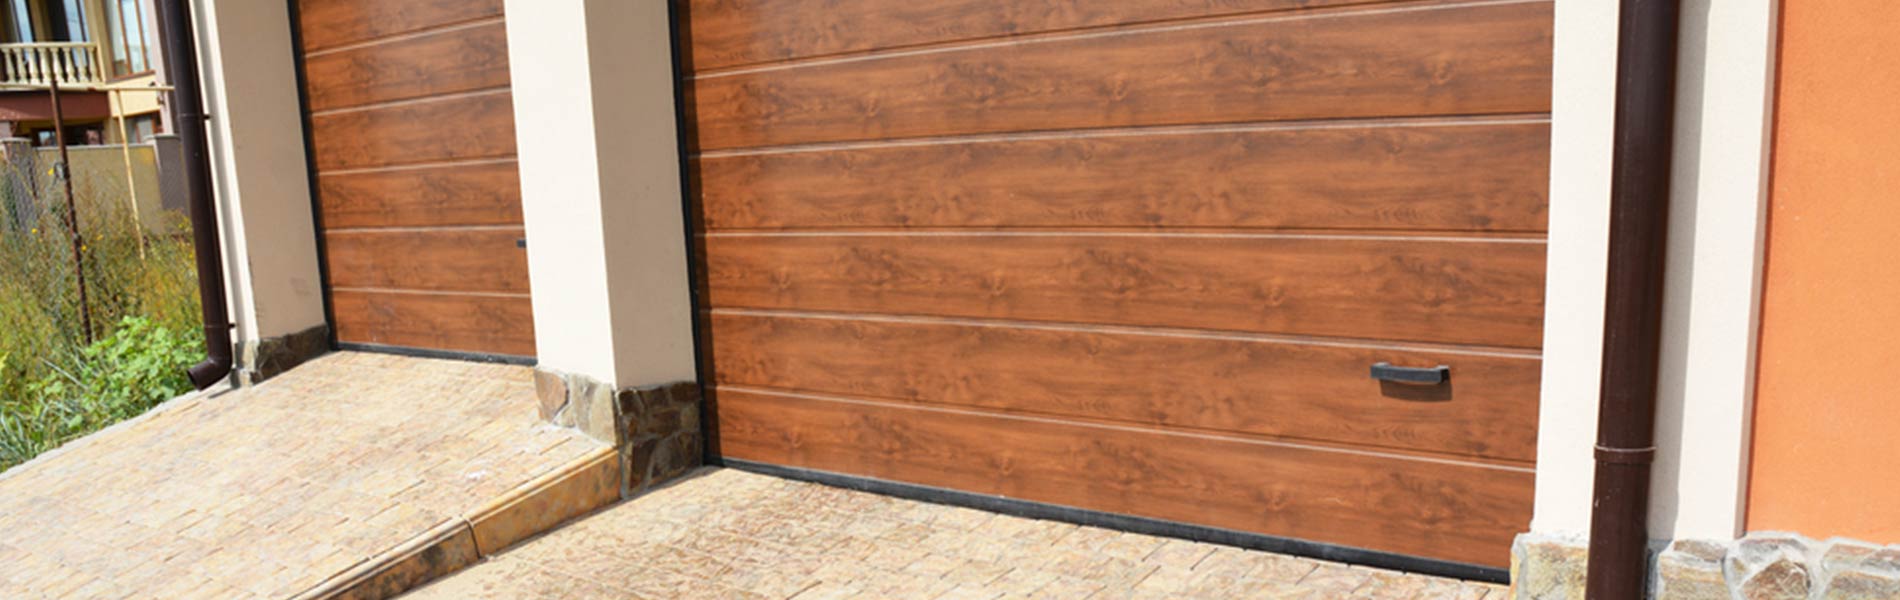 Minimalist Express Garage Door Repair for Small Space